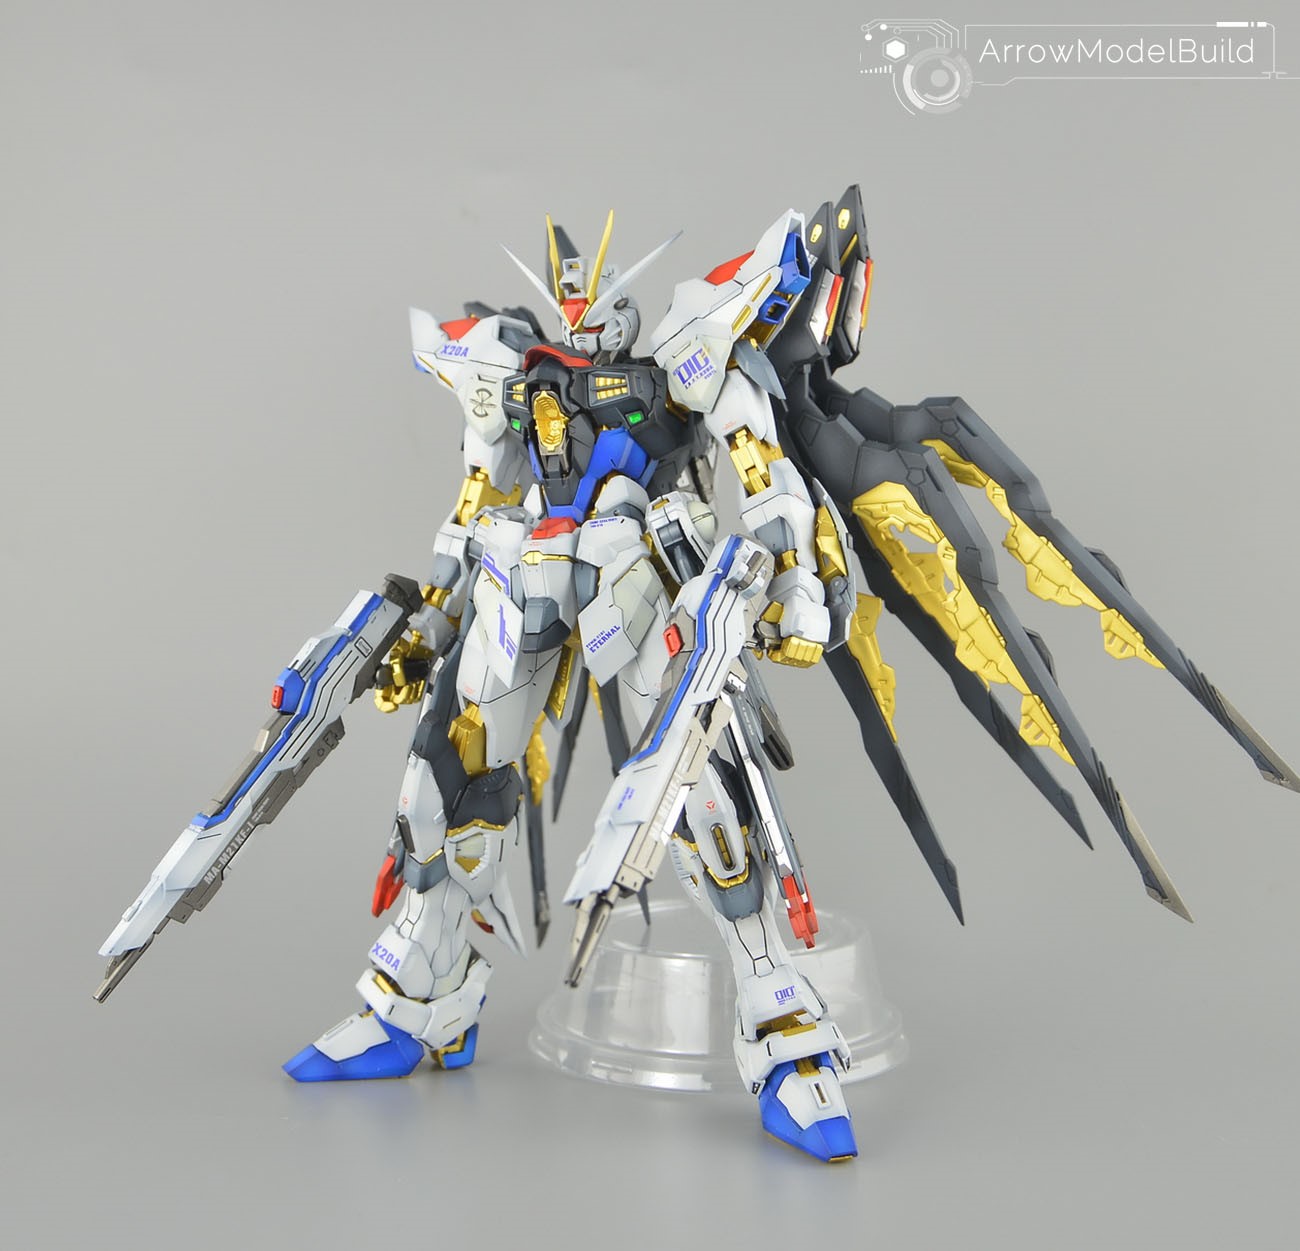 ArrowModelBuild - Figure and Robot, Gundam, Military, Vehicle, Arrow ...